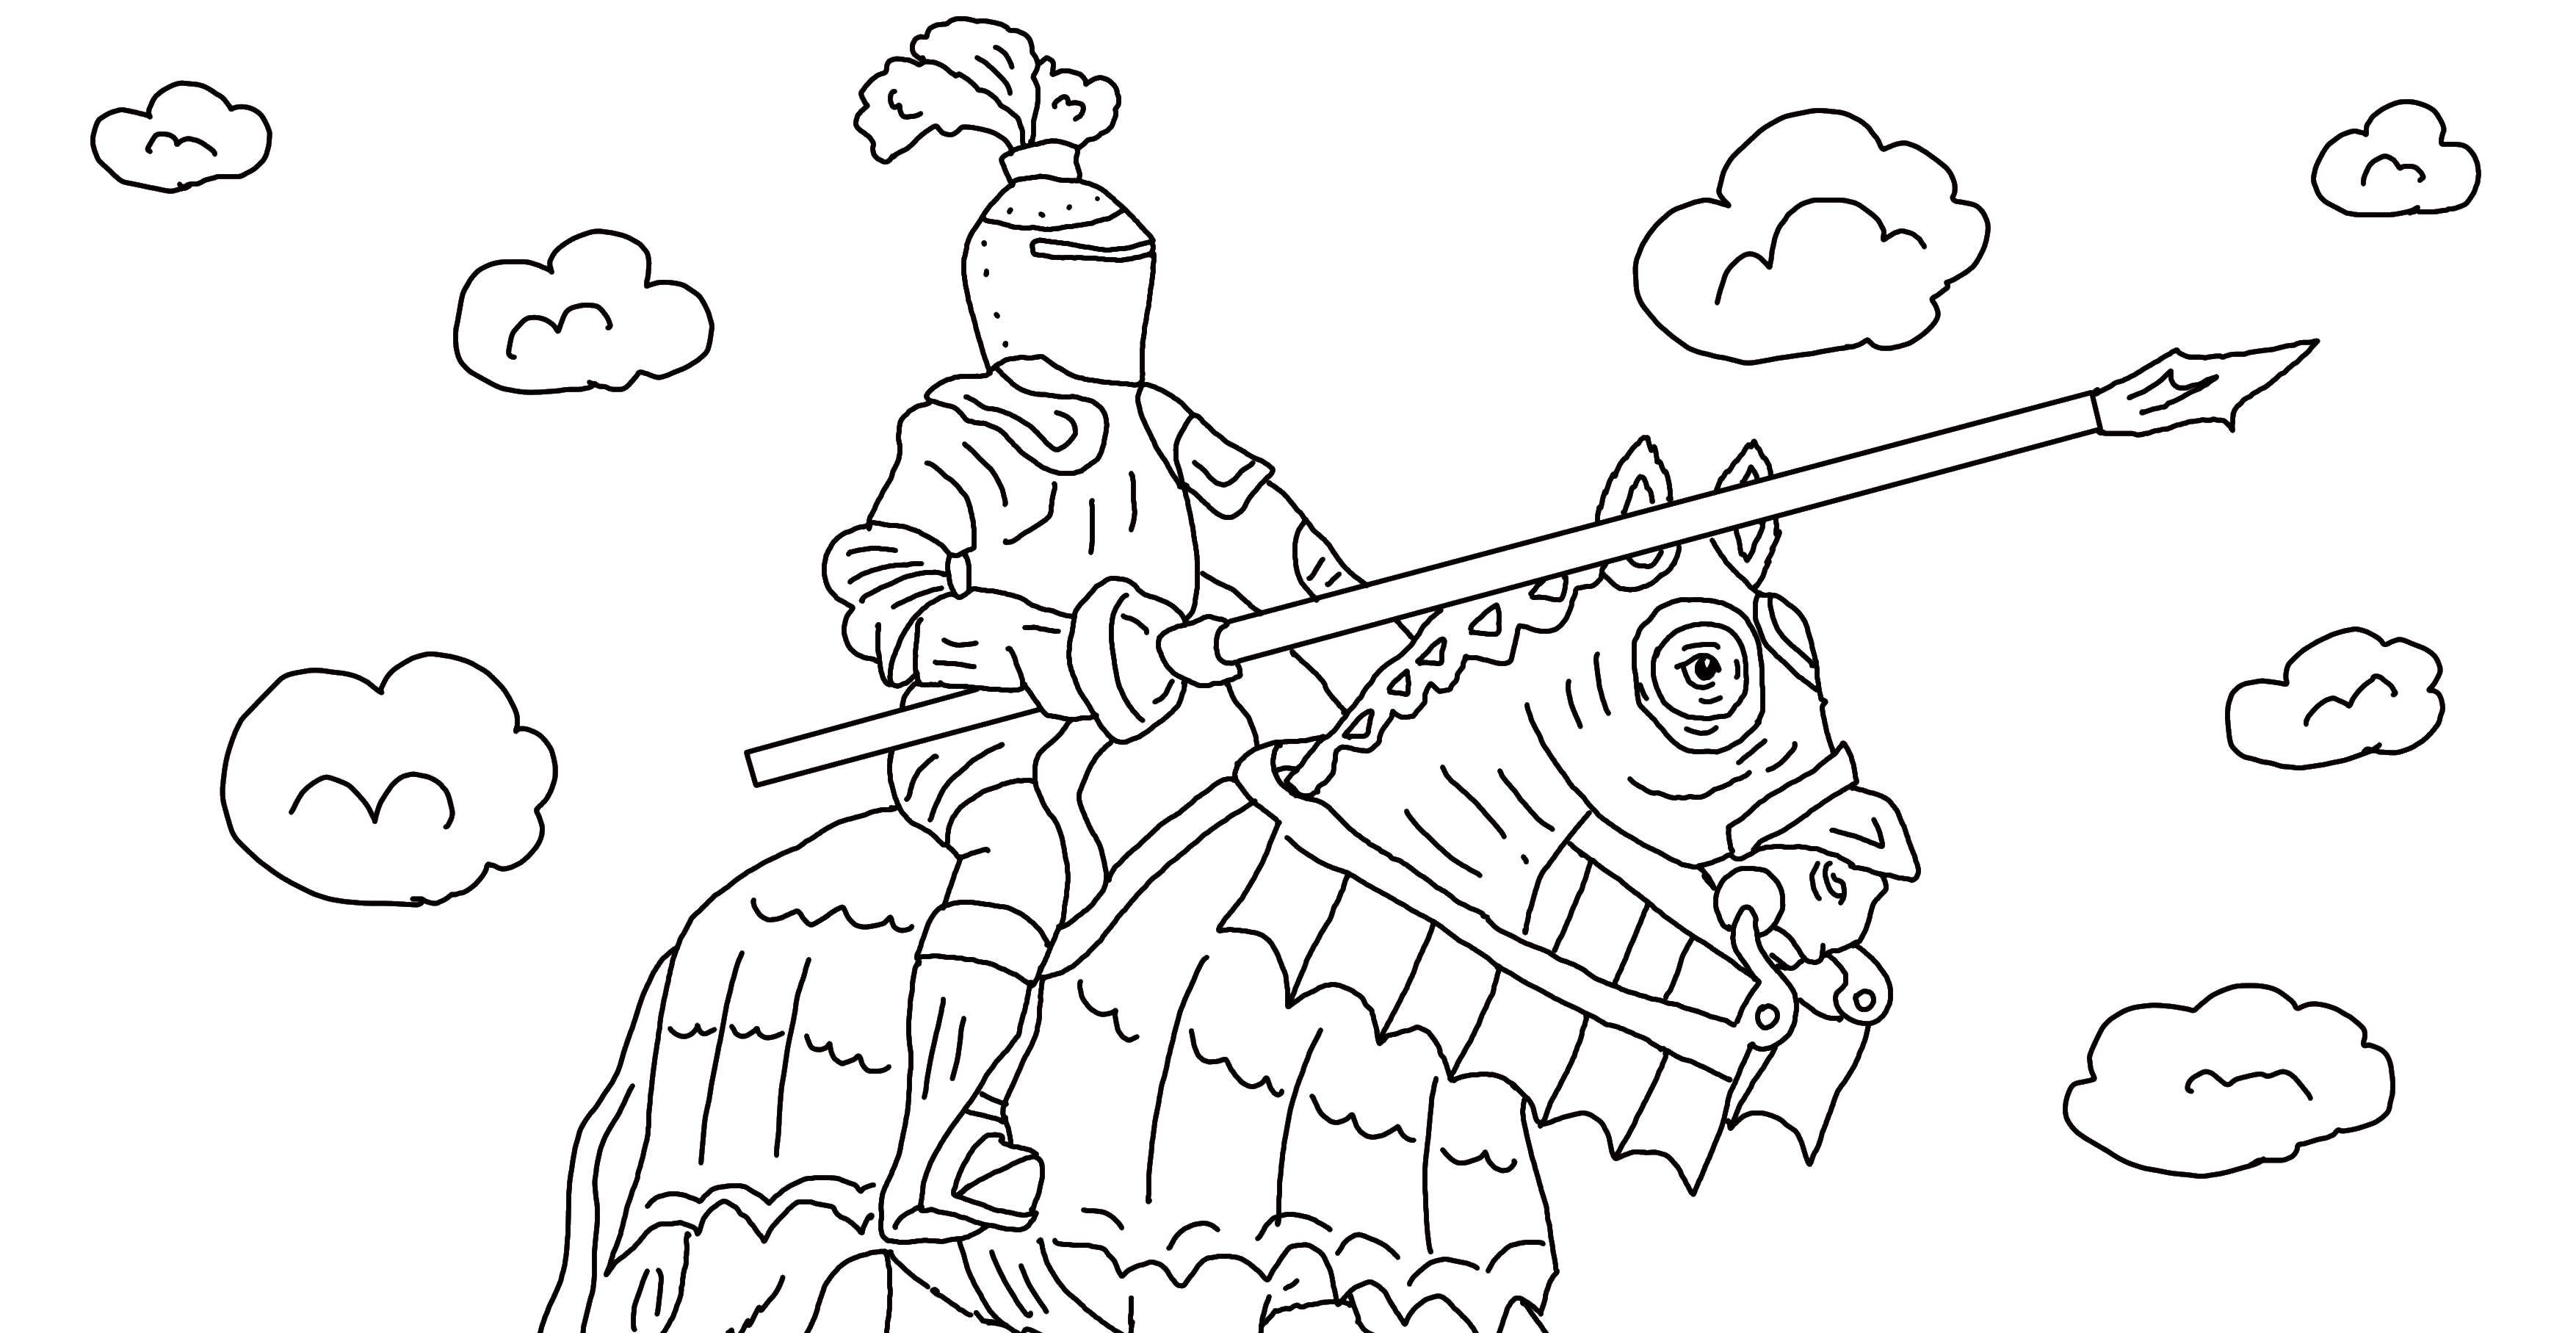 Название: Раскраска Рыцарь на коне в доспехах. Категория: Рыцари. Теги: рыцарь, доспехи.